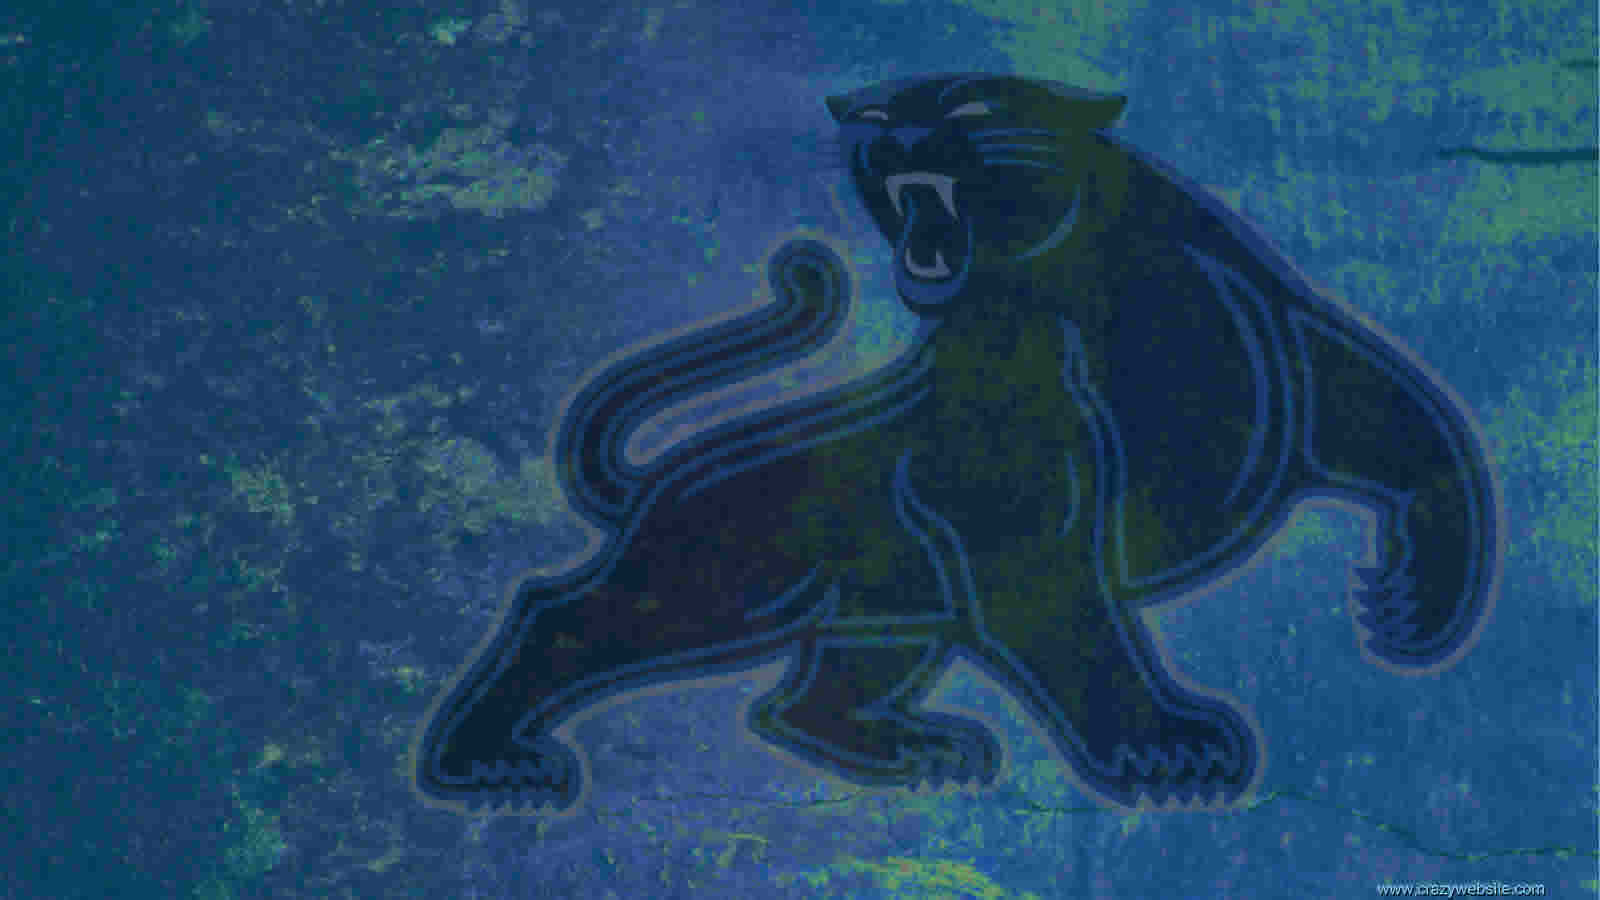 Carolina Panthers full figure panther official team logo wallpaper